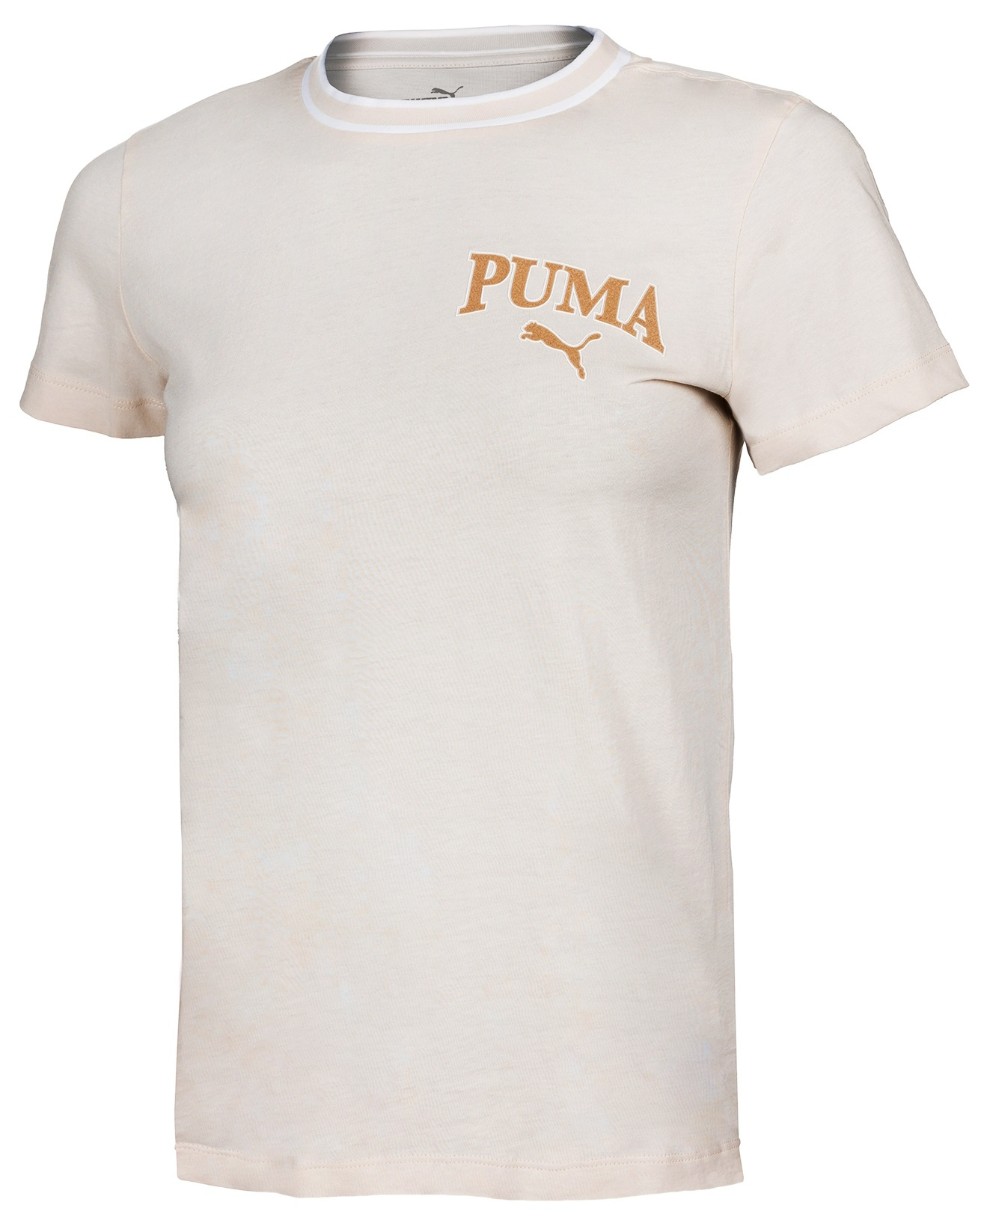 Женская футболка Puma Squad Tee Alpine Snow, s.S